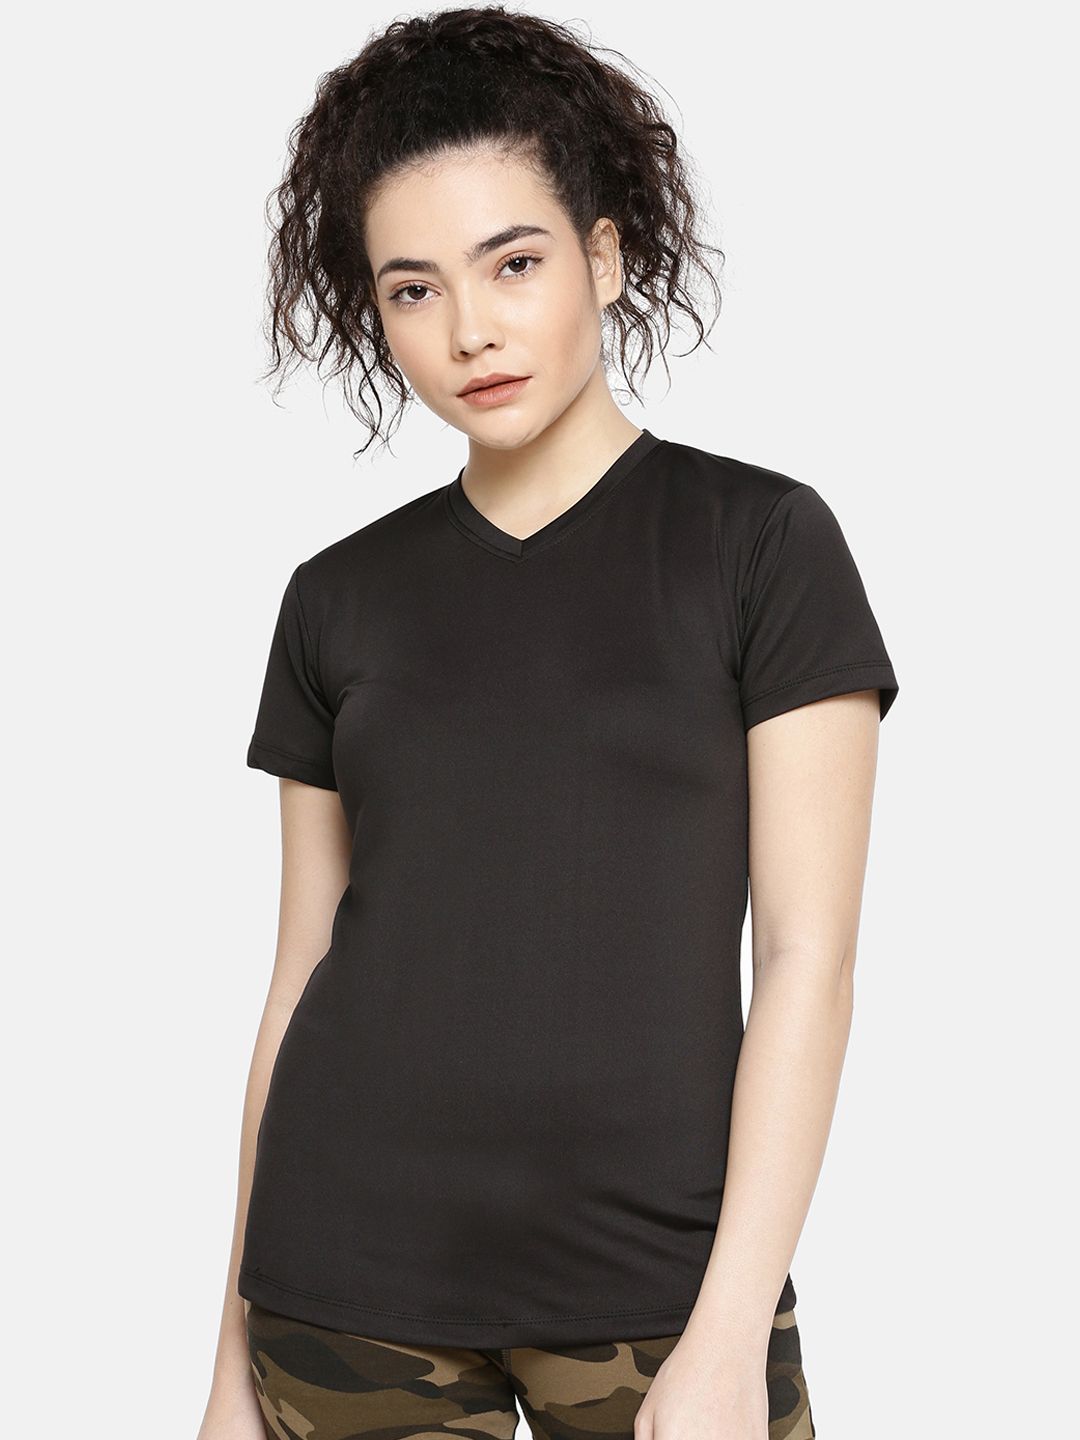 GOLDSTROMS Women Black Solid V-Neck T-shirt Price in India